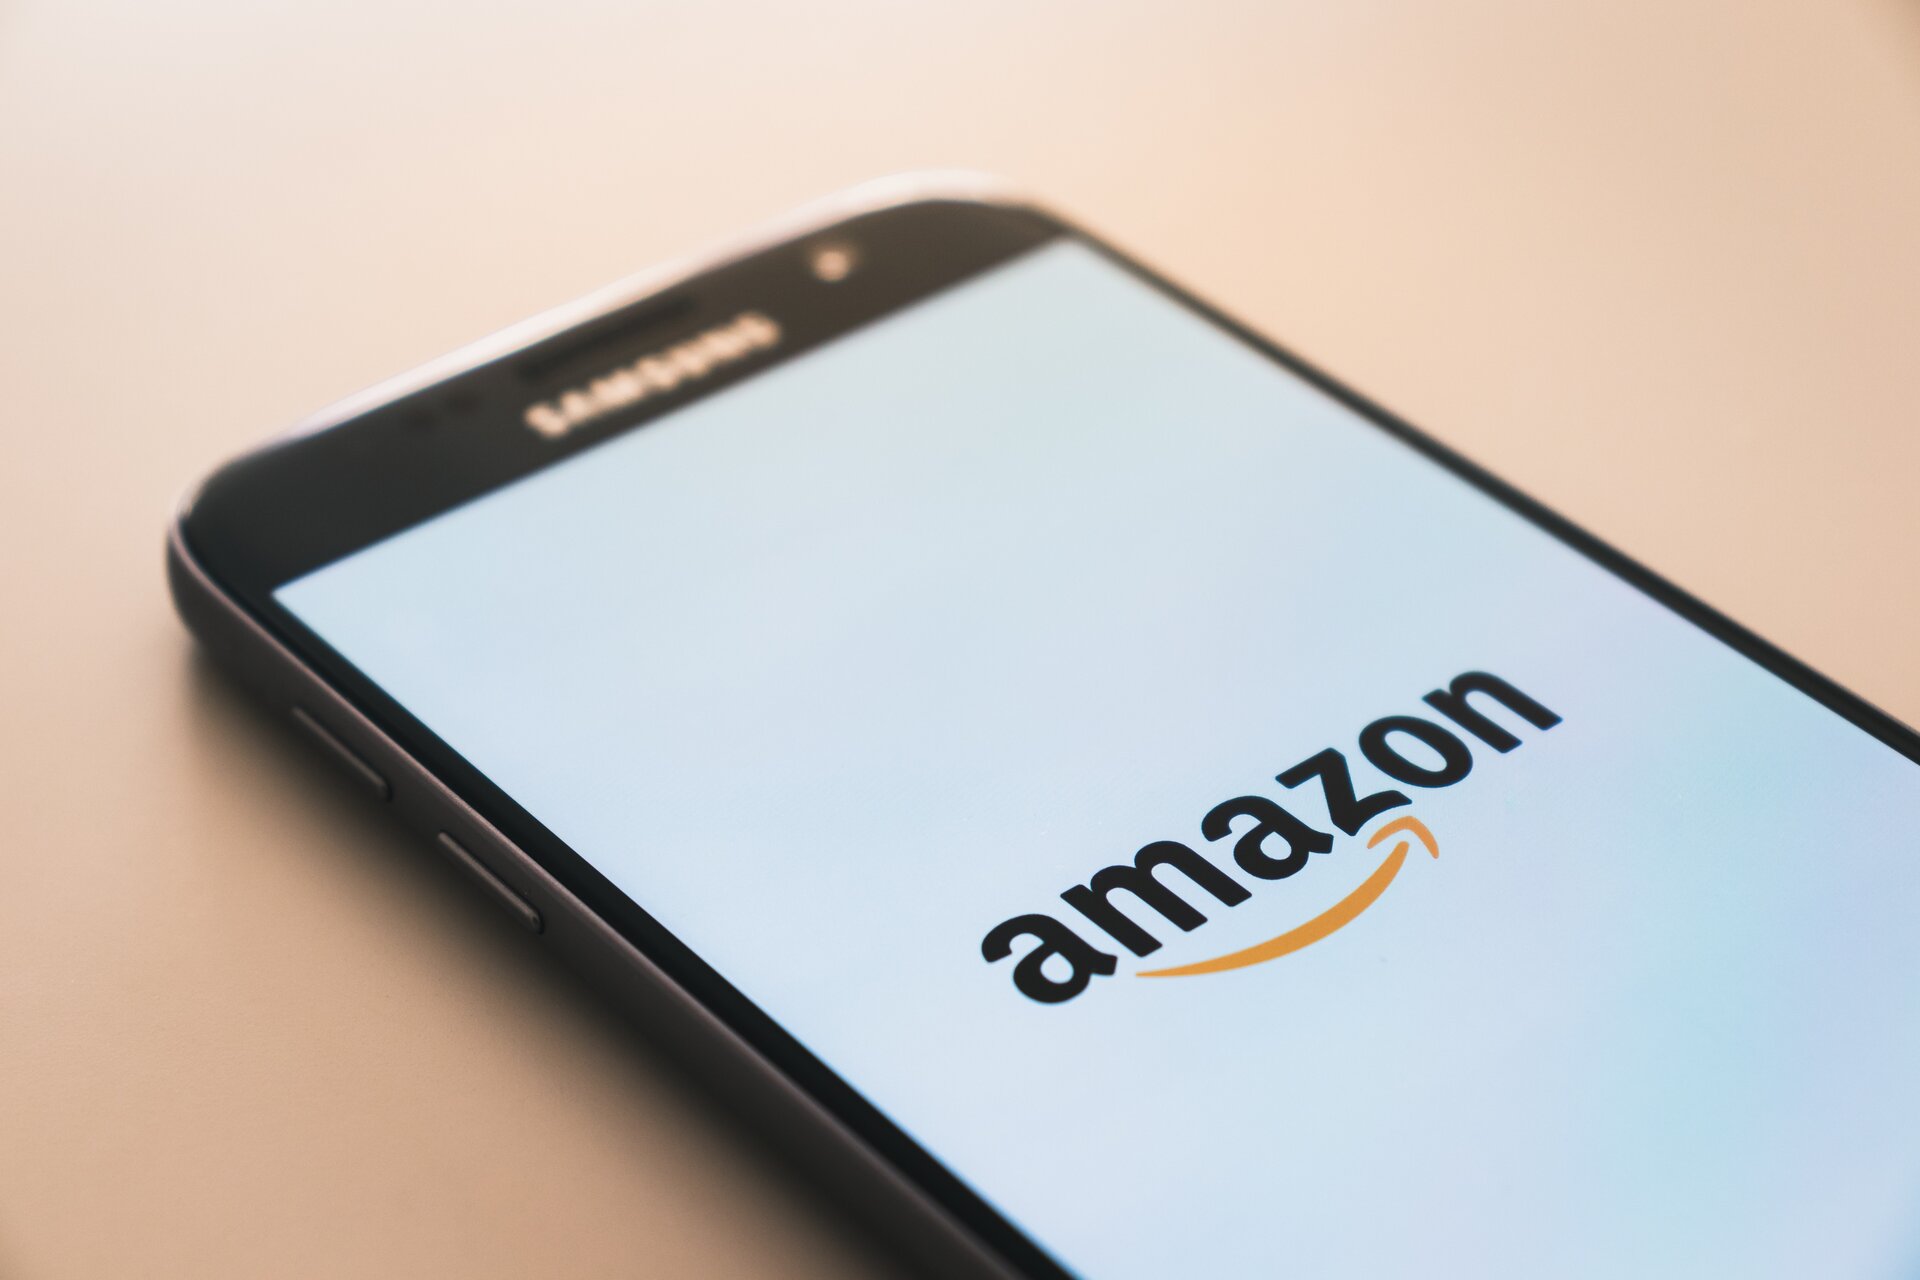 Evercore Teknoloji Analistinin Yeni Favorisi: Amazon